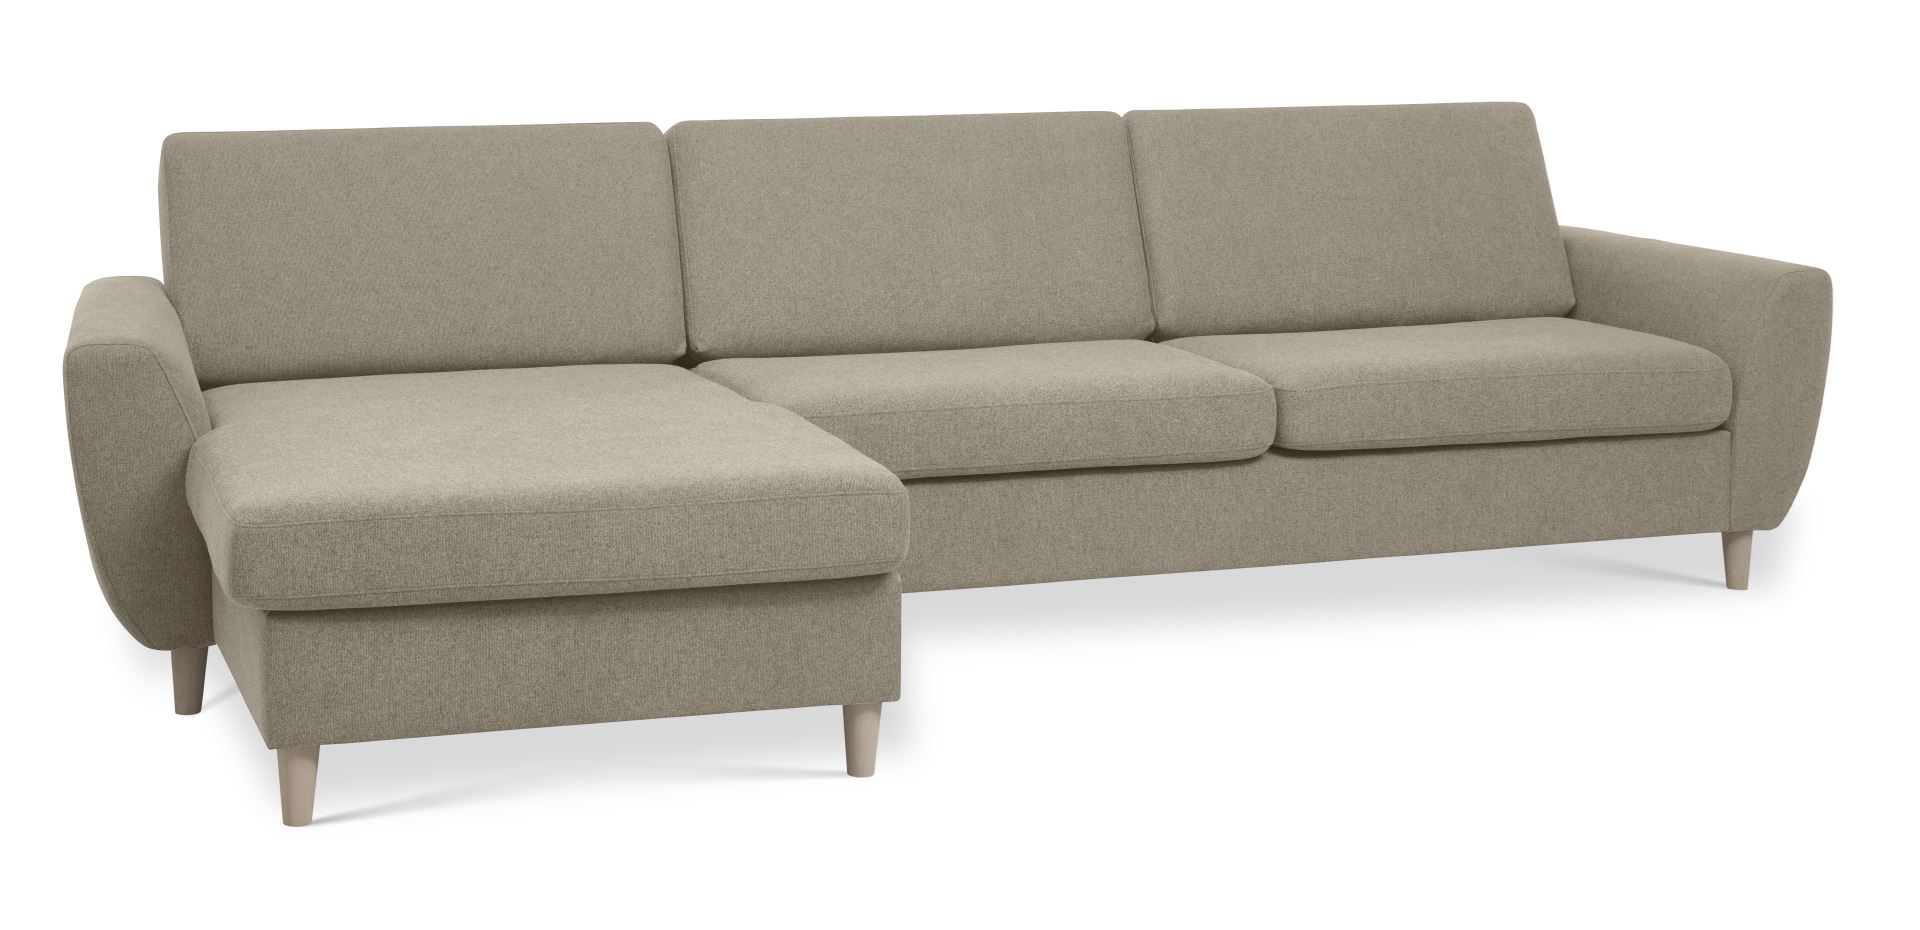 Wendy set 8 3D XL sofa, m. chaiselong - antelope beige polyester stof og natur træ